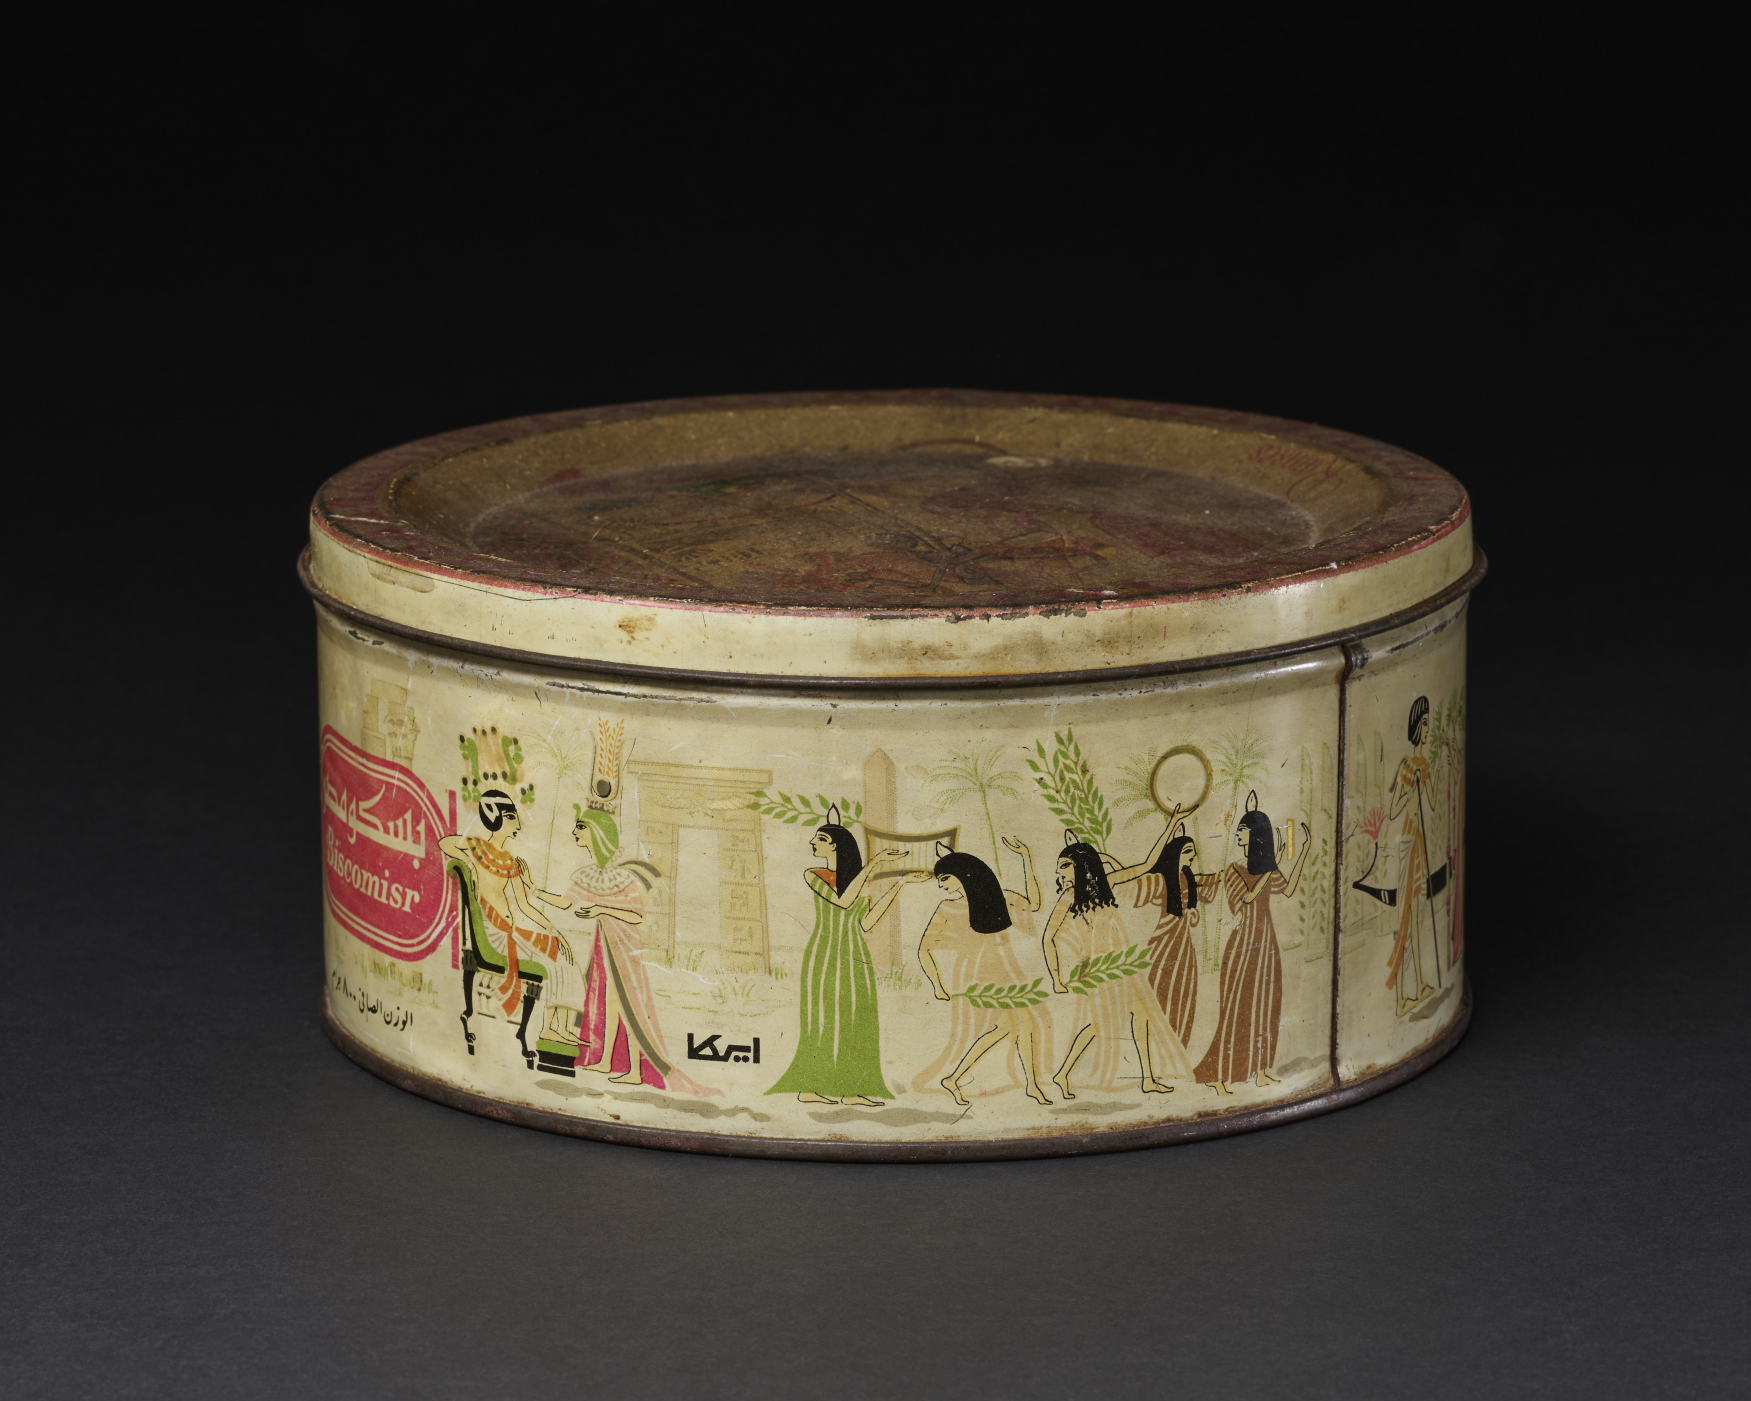 Sweet tin depicting images of a young Tutankhamun